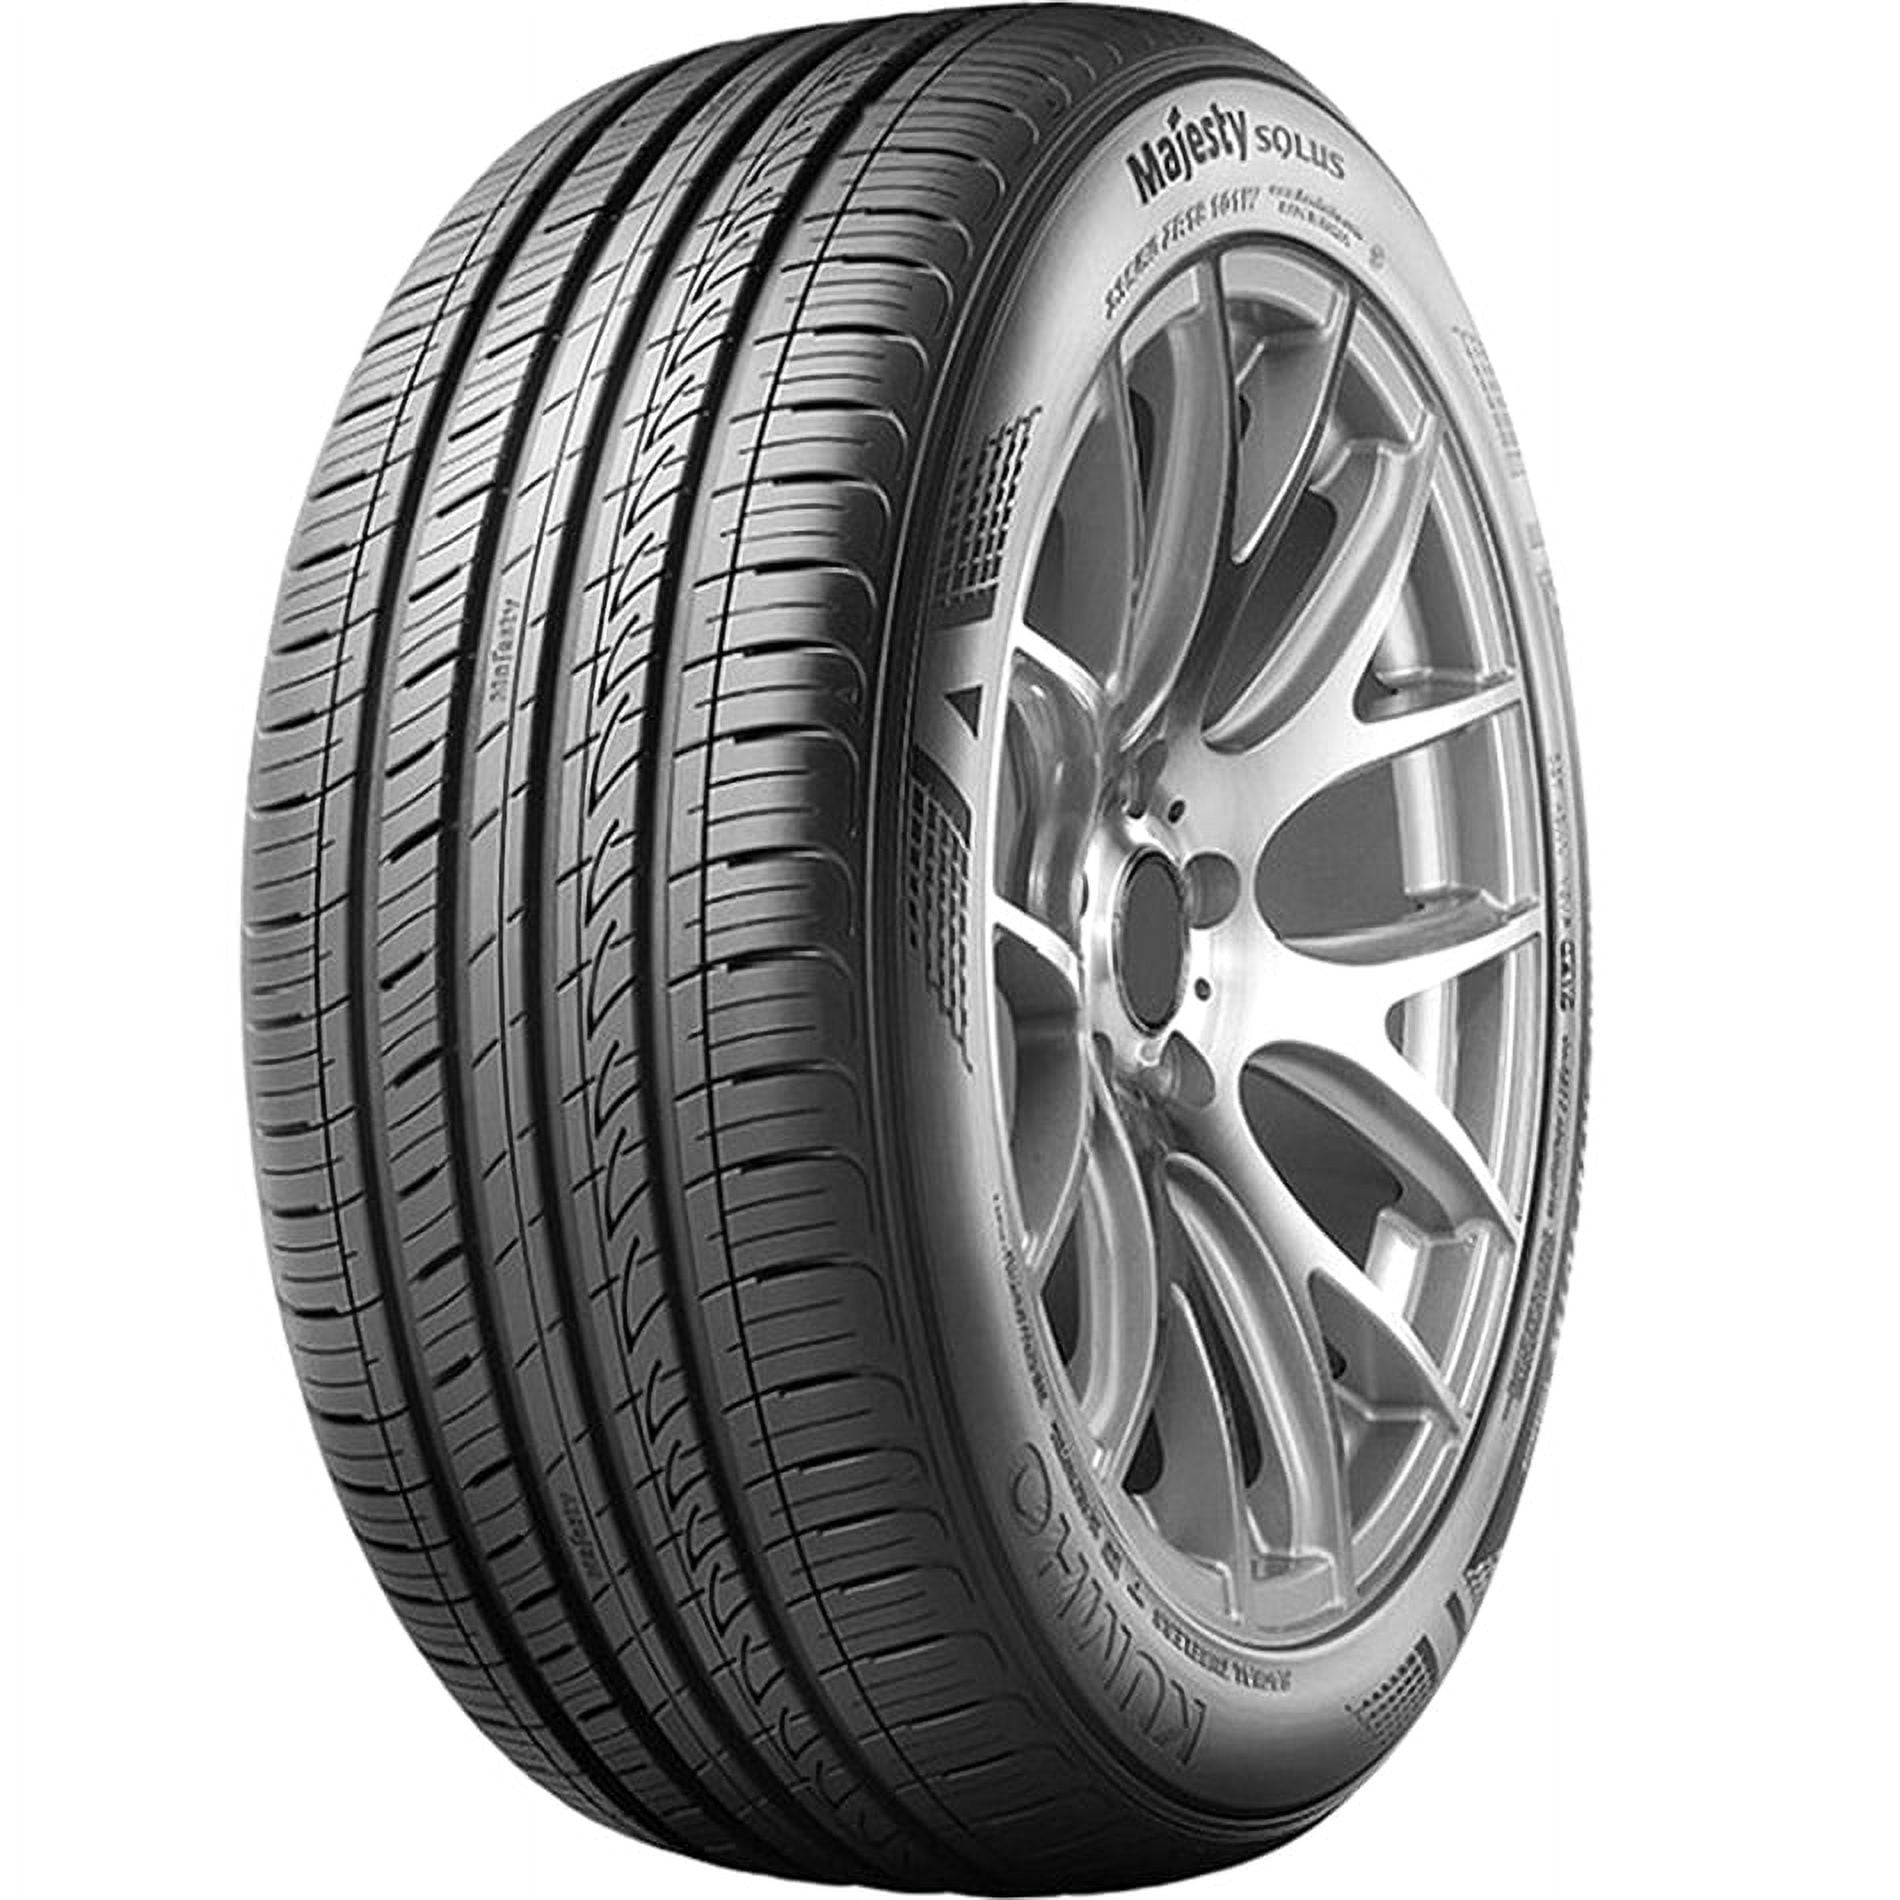 Kumho Majesty Solus 225/45R17 91W A/S High Performance Tire